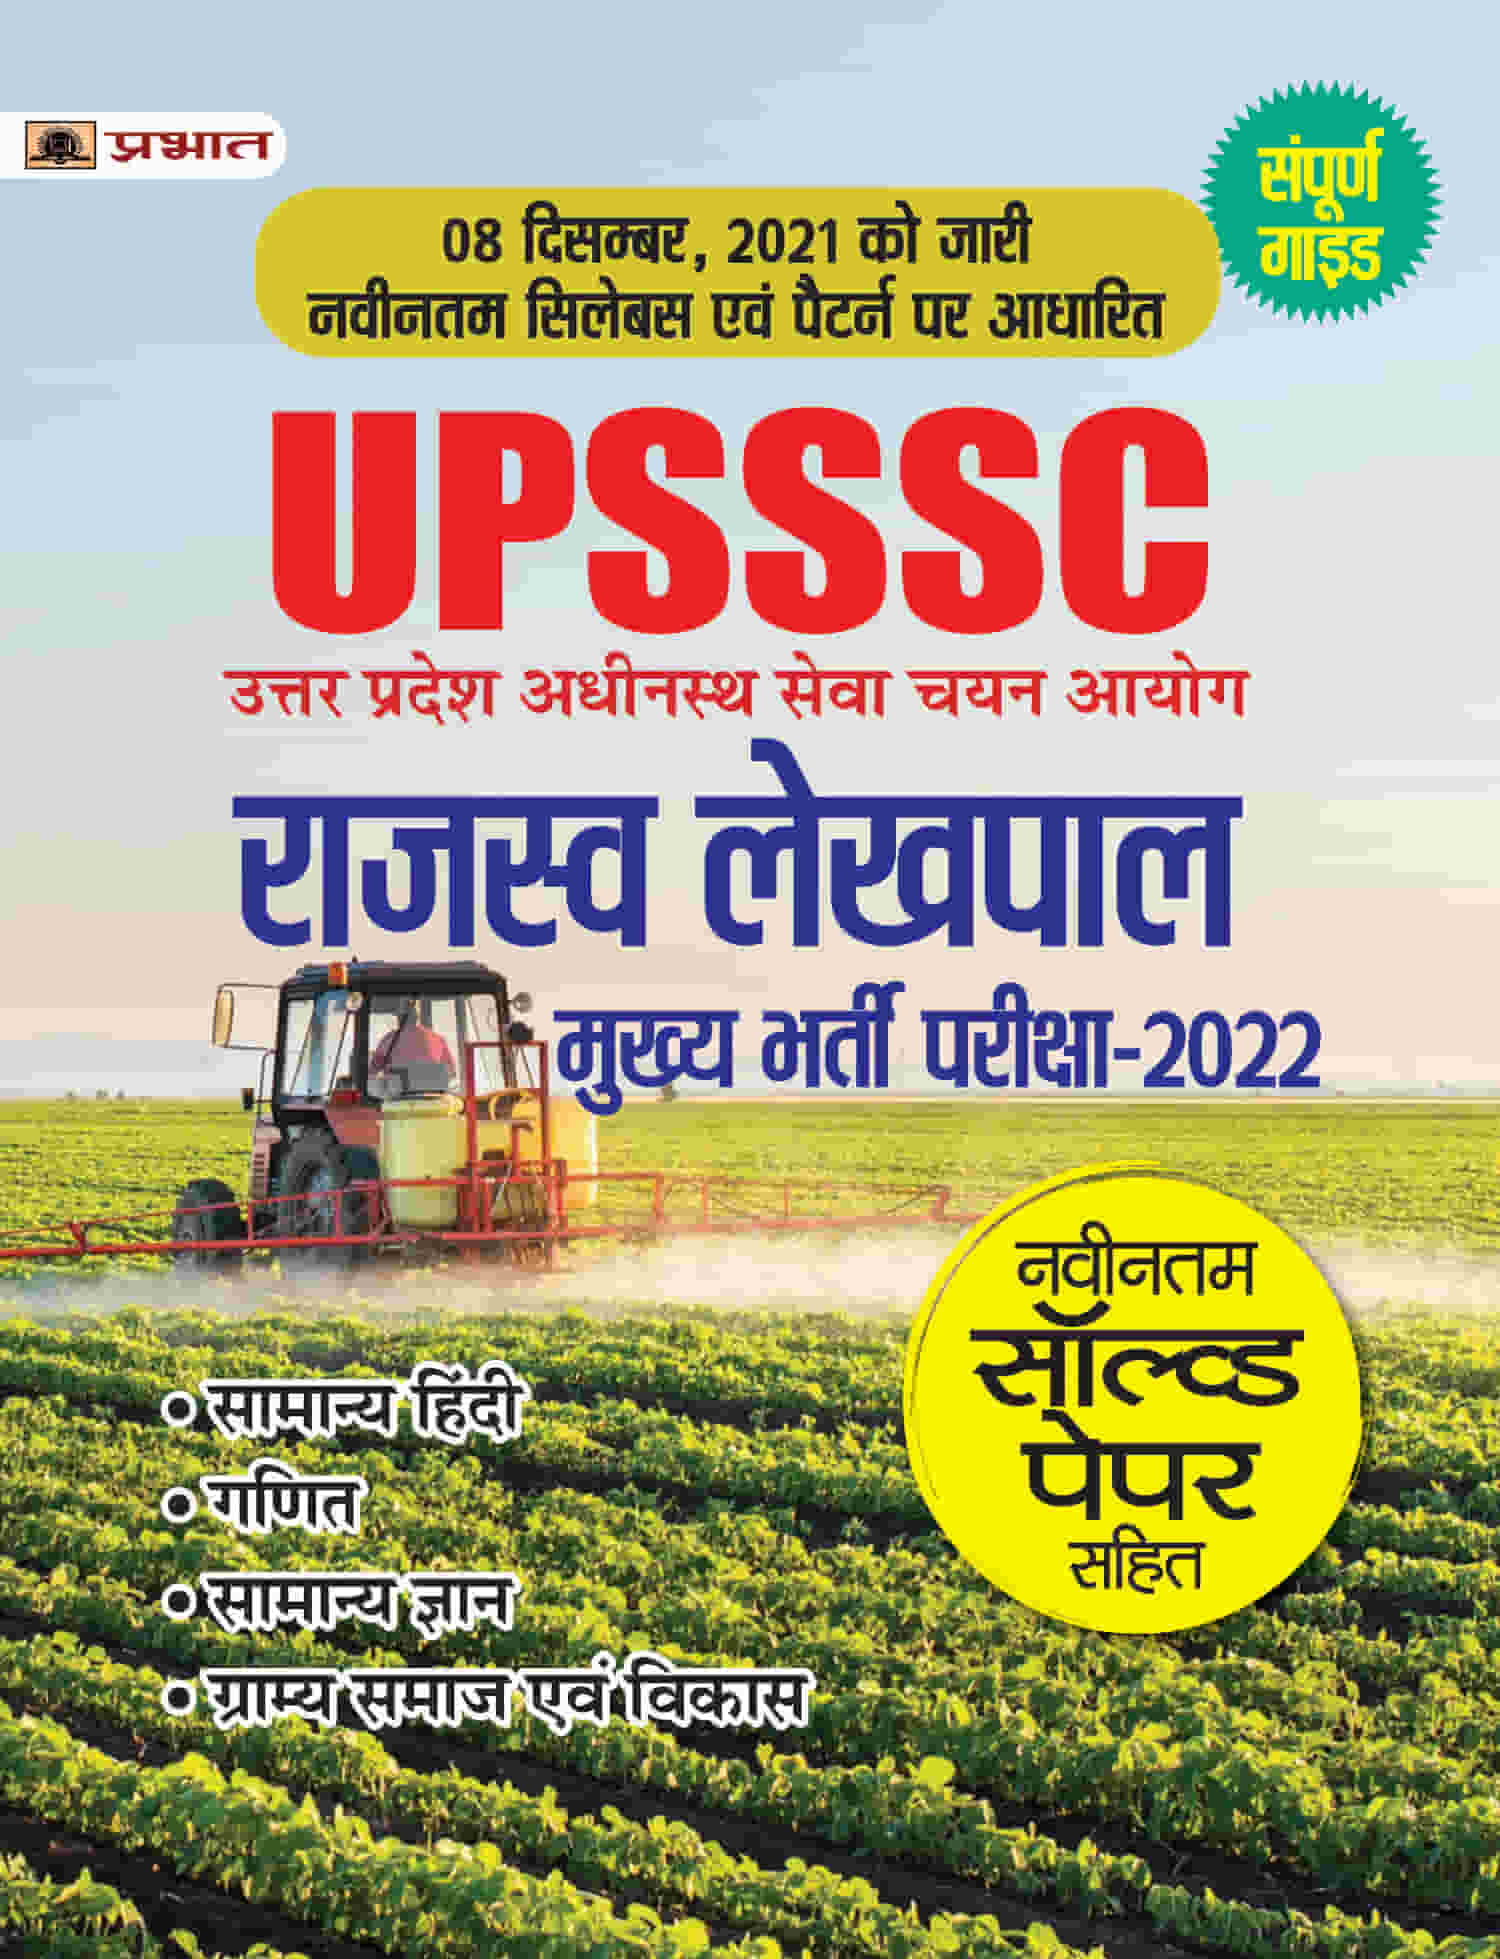 UPSSSC Rajaswa Lekhpal Bharti Pariksha- UPSSSC Lekhpal Entrance Exam 2022